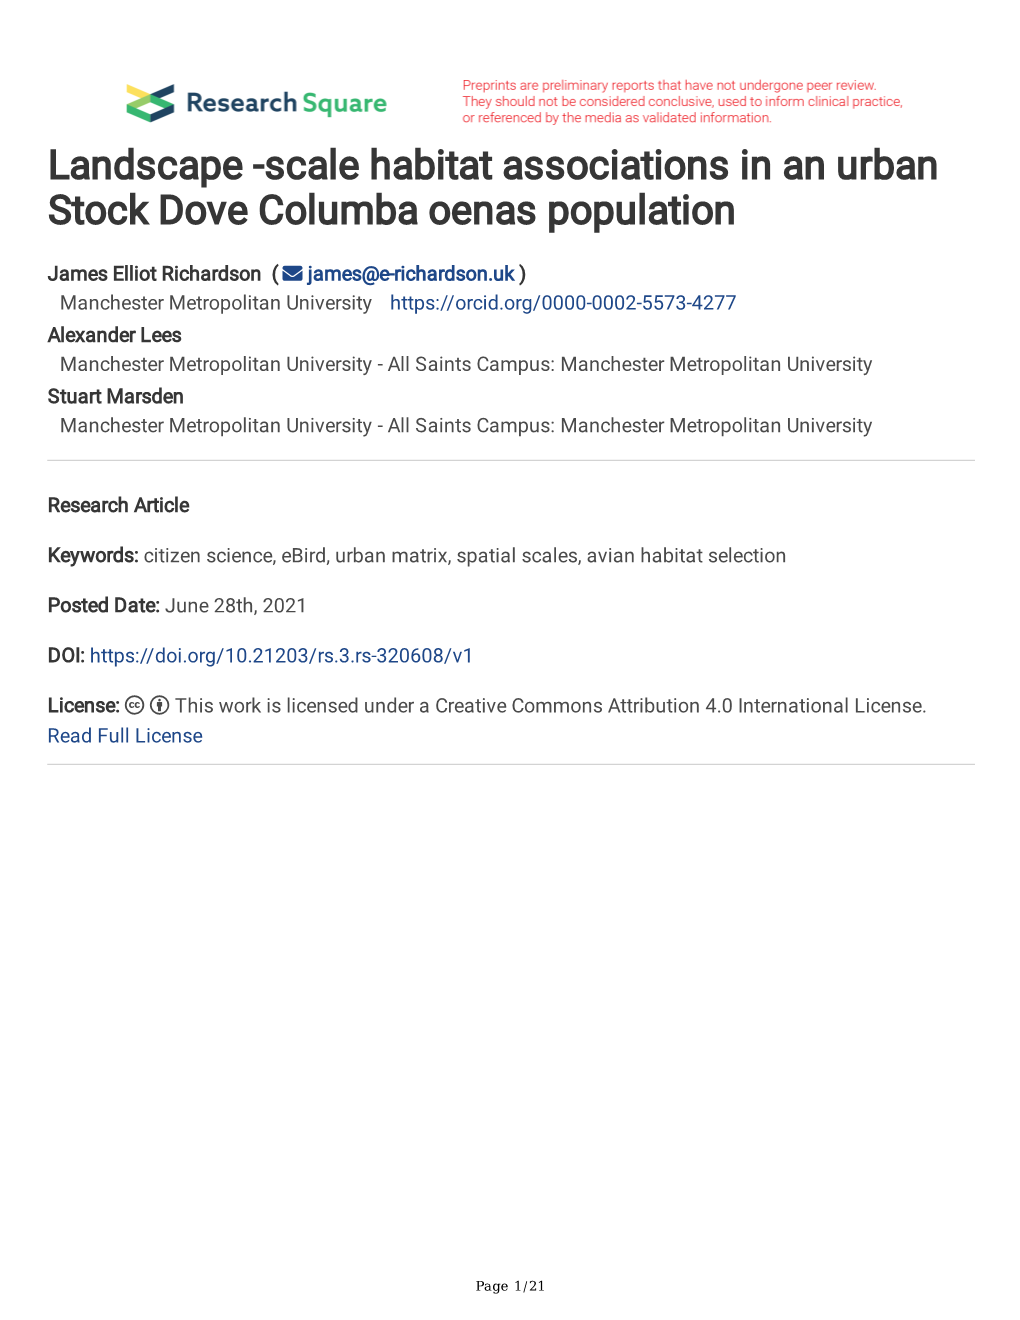 Scale Habitat Associations in an Urban Stock Dove Columba Oenas Population